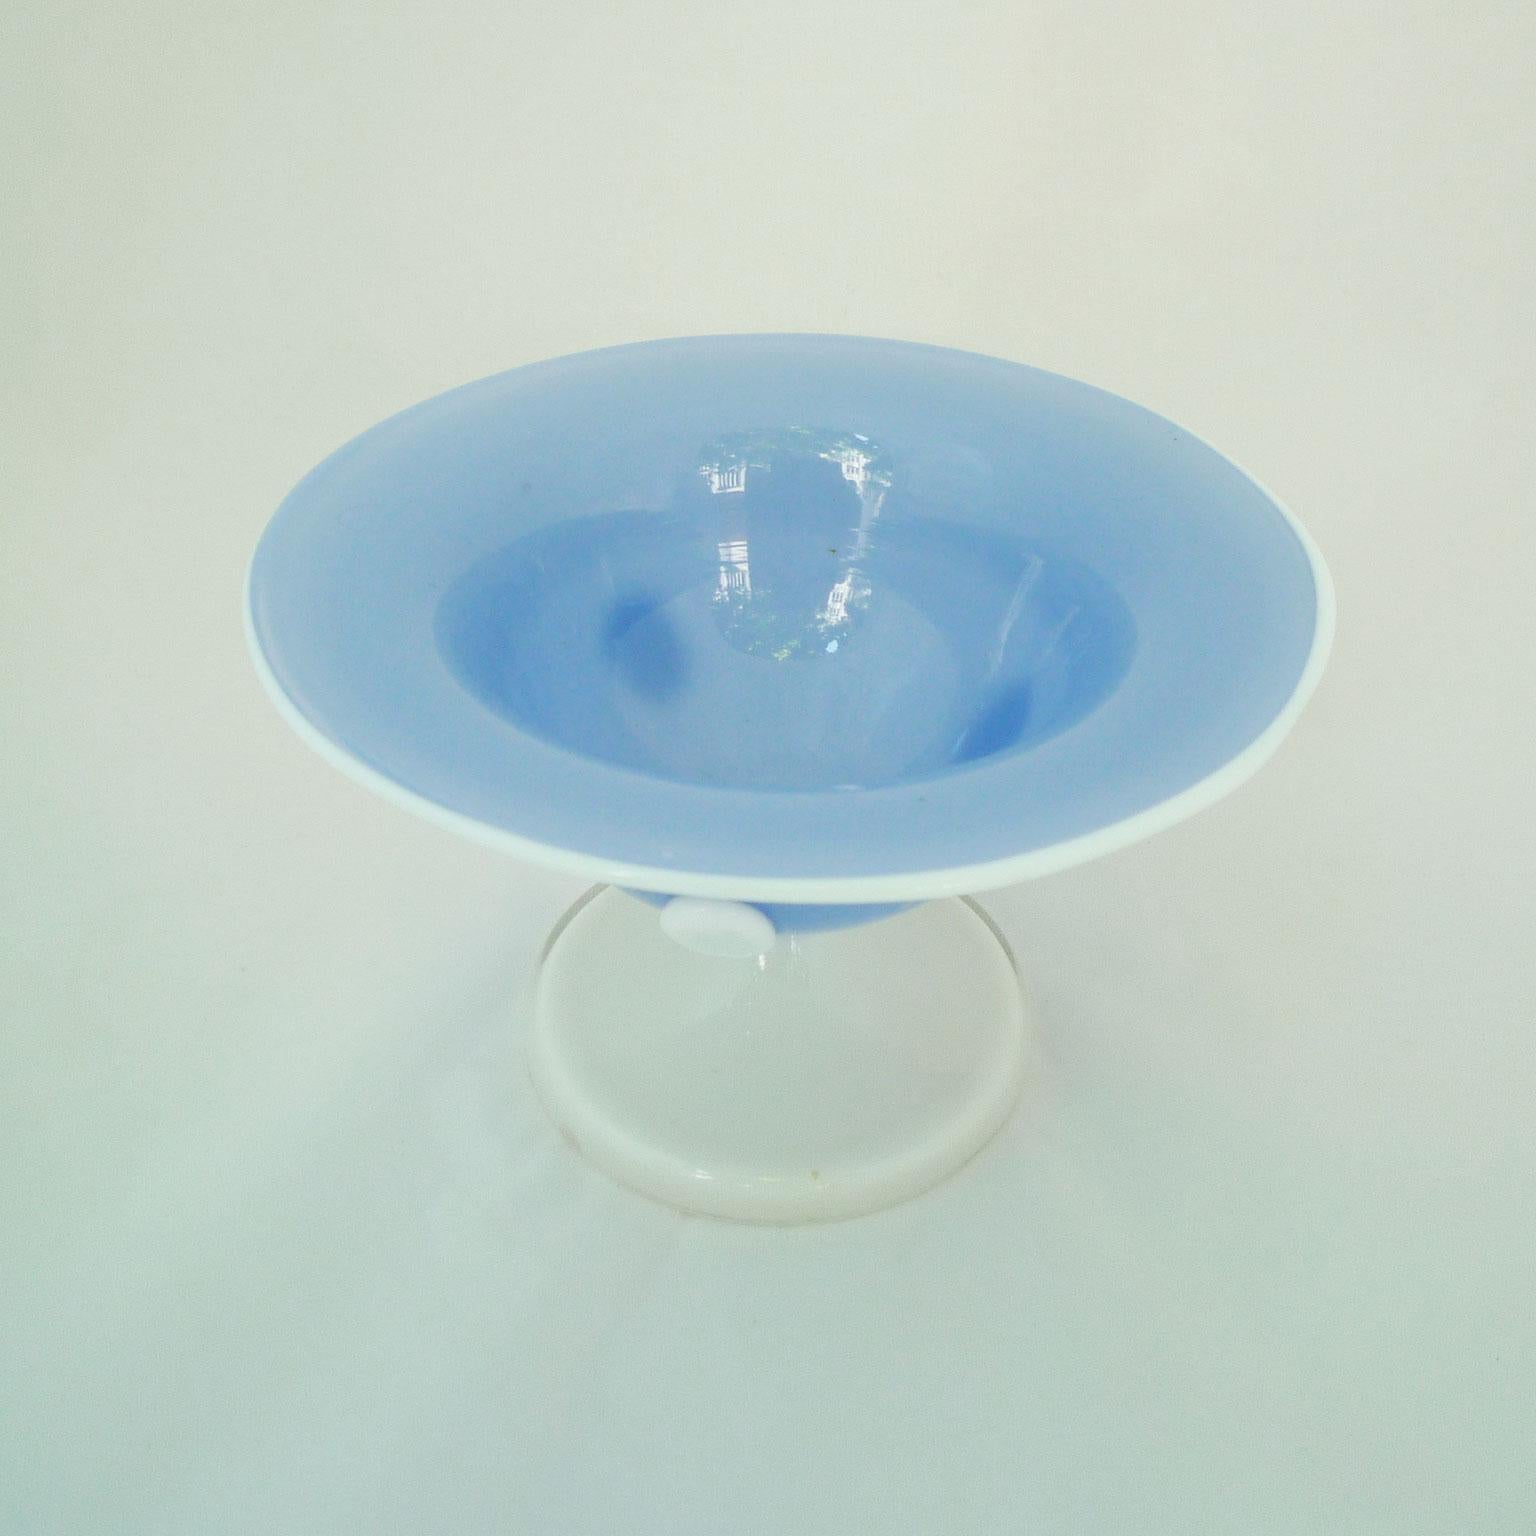 Blown Glass Confectionery Bowl Series Tango, Loetz, Powolny, Flashed Glass, 1920s, Art Deco